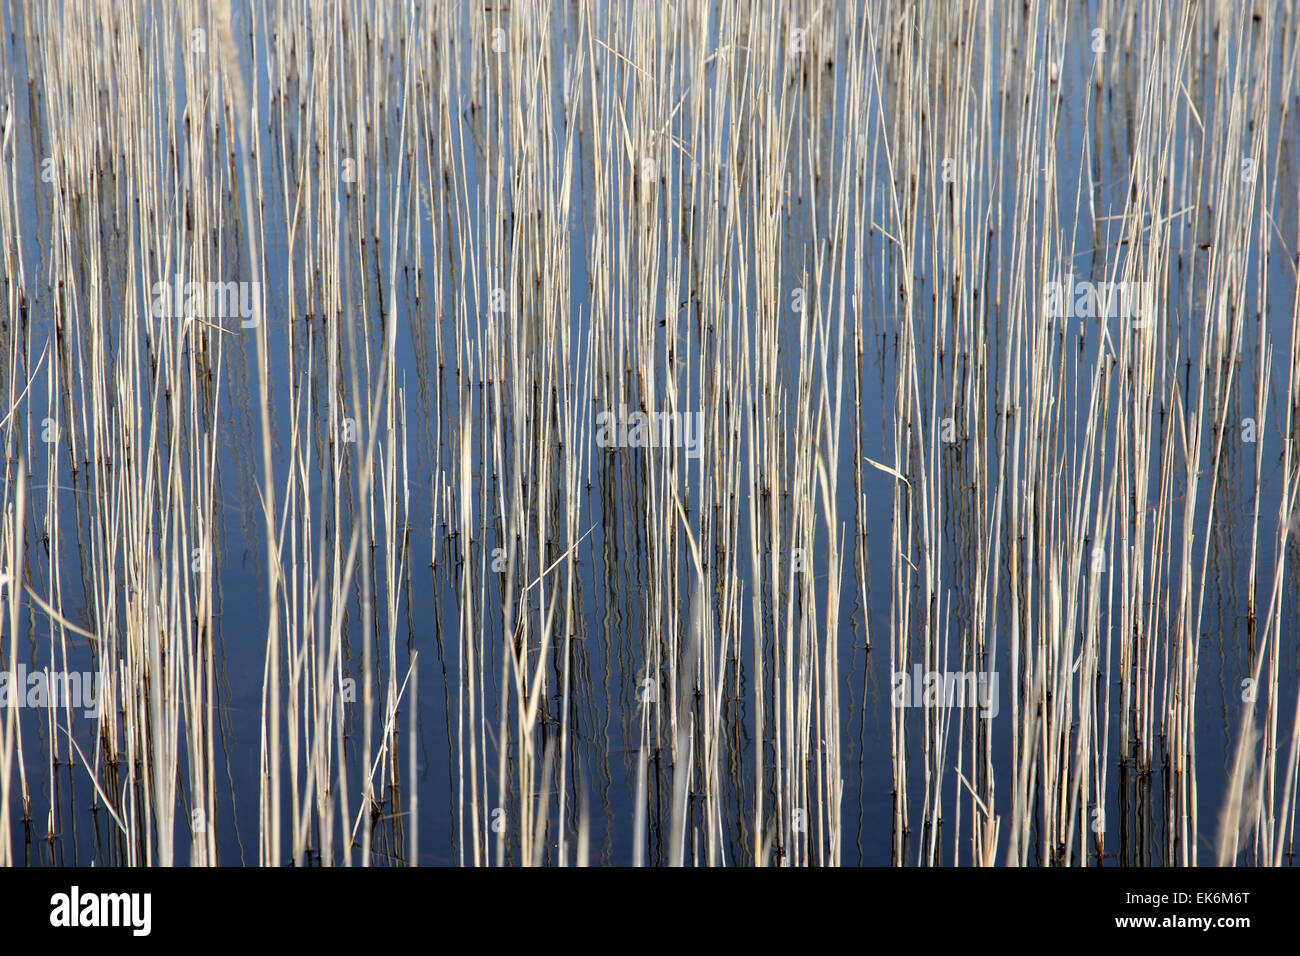 reed stems springtime pond fenland Suffolk East Anglia Stock Photo